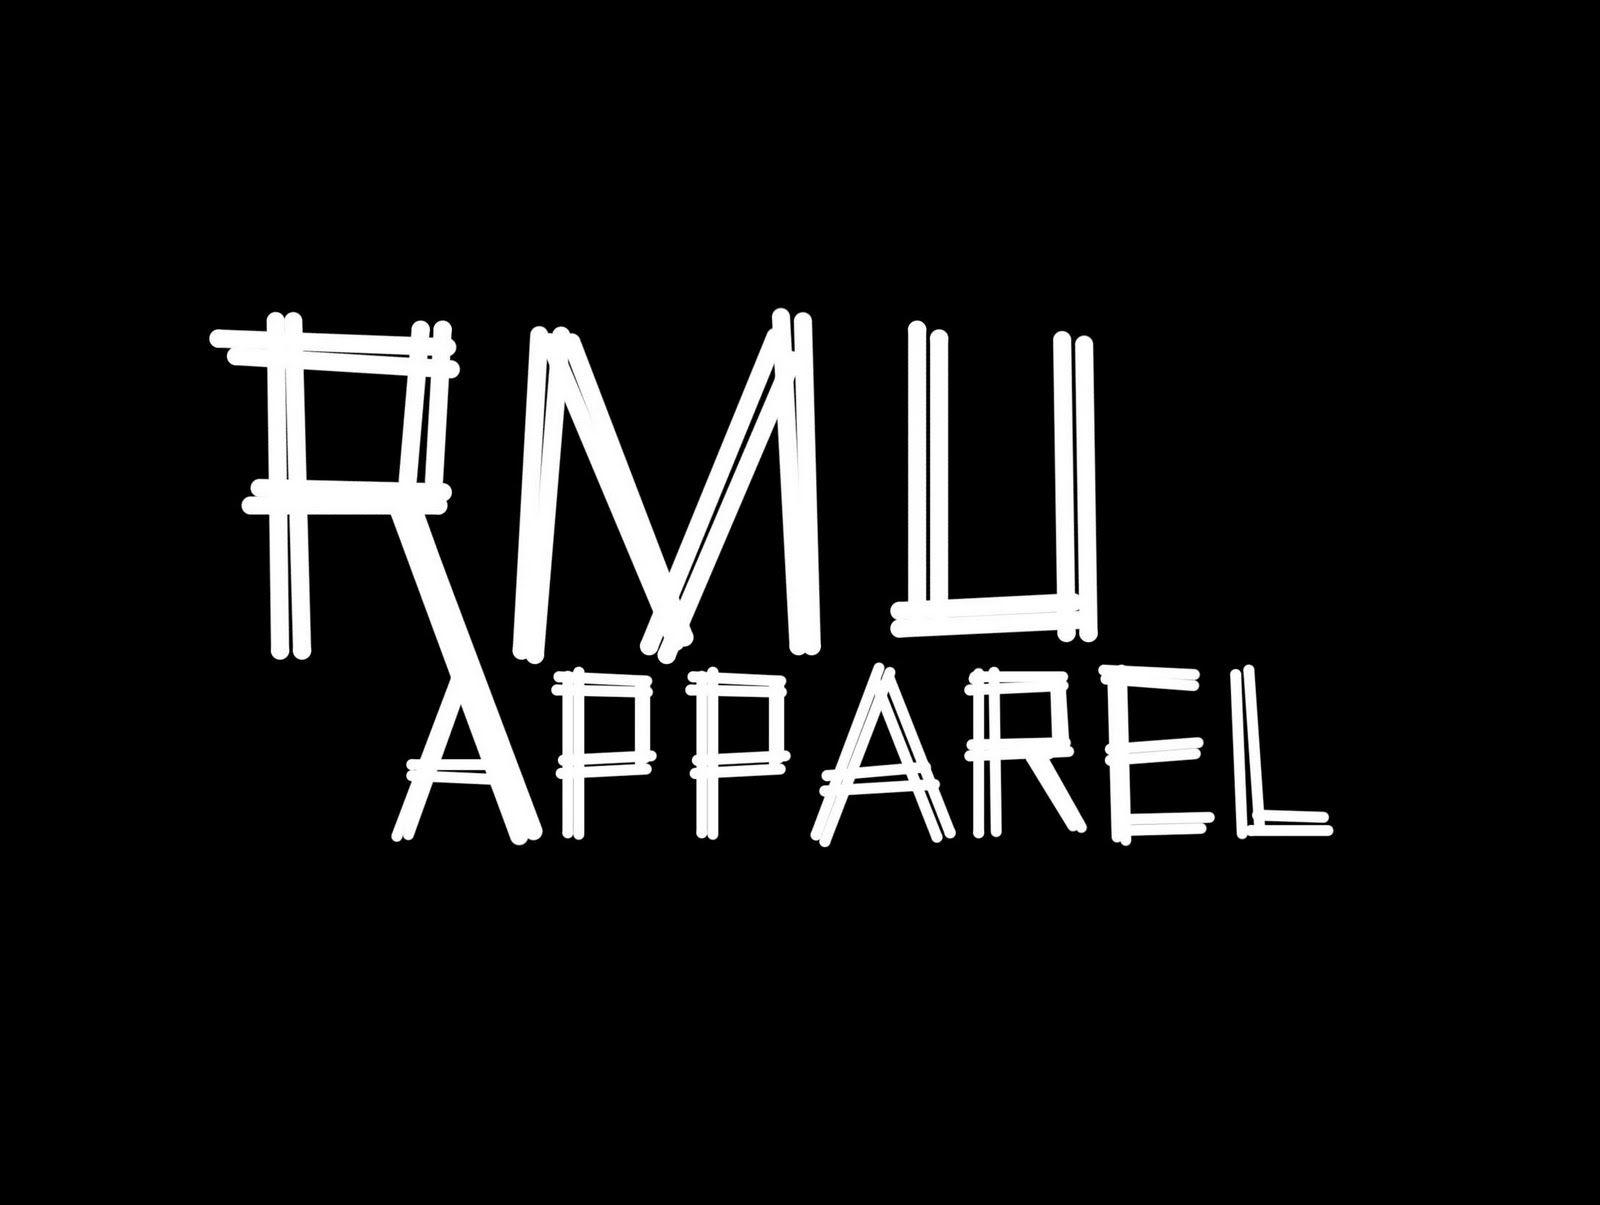 French Apparel Logo - Zach French creative: RMU Apparel logo design contest